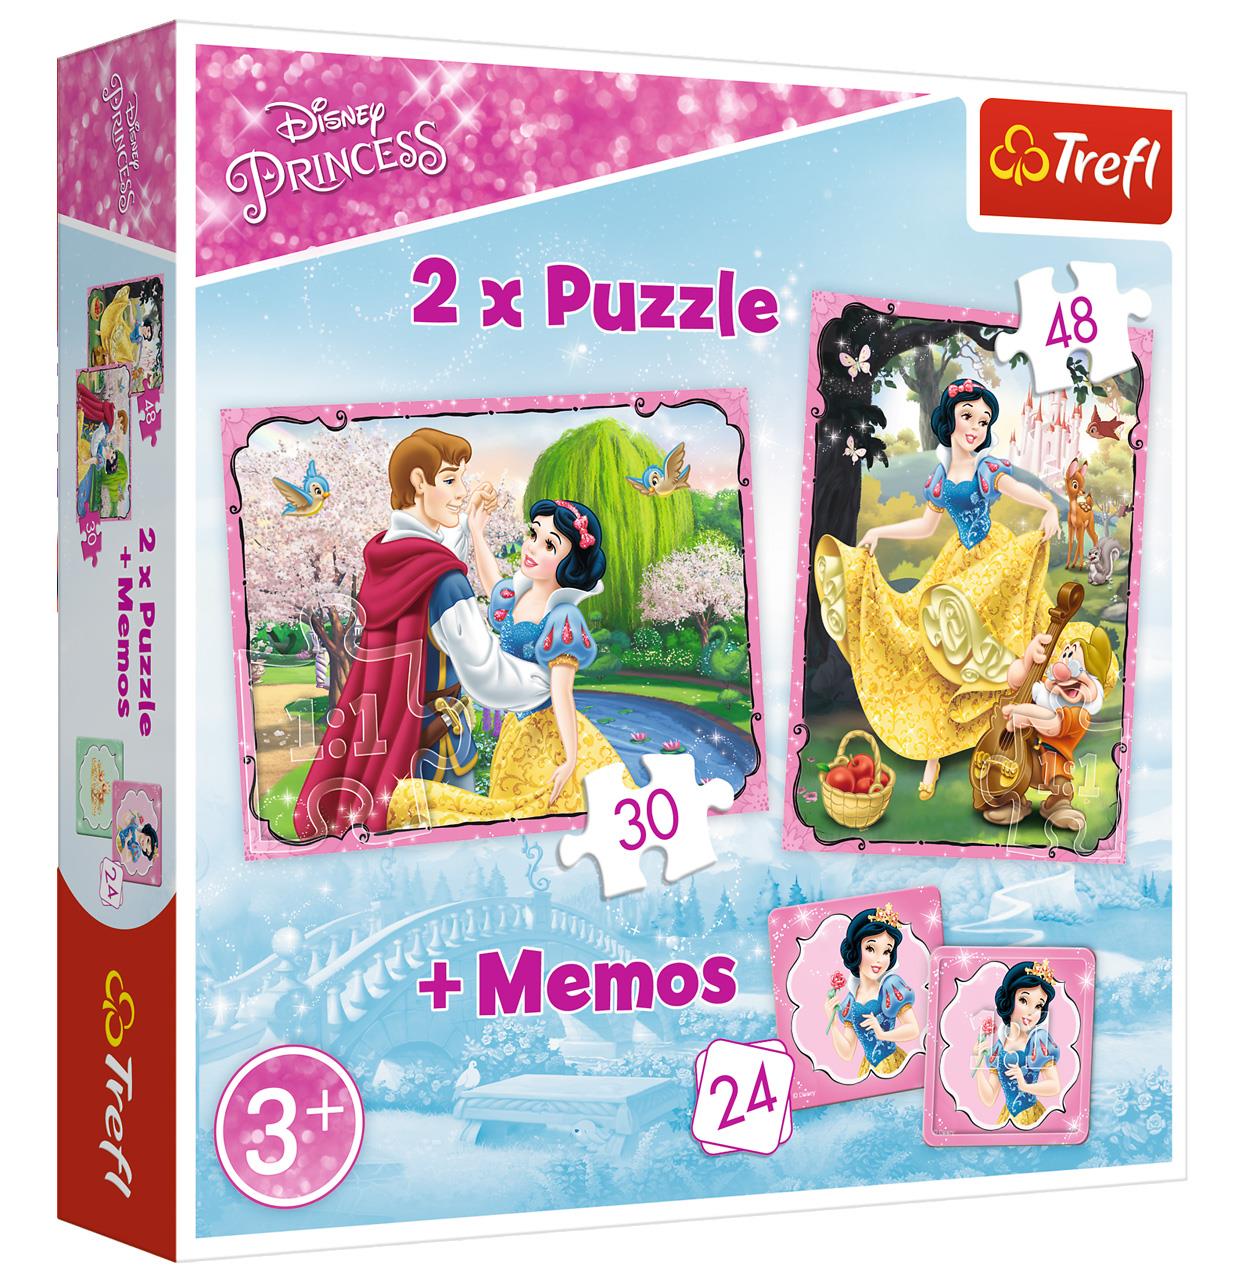 Trefl Çocuk Puzzle 90603 Snow White In Love, Disney 2 in 1 + Memos Puzzle